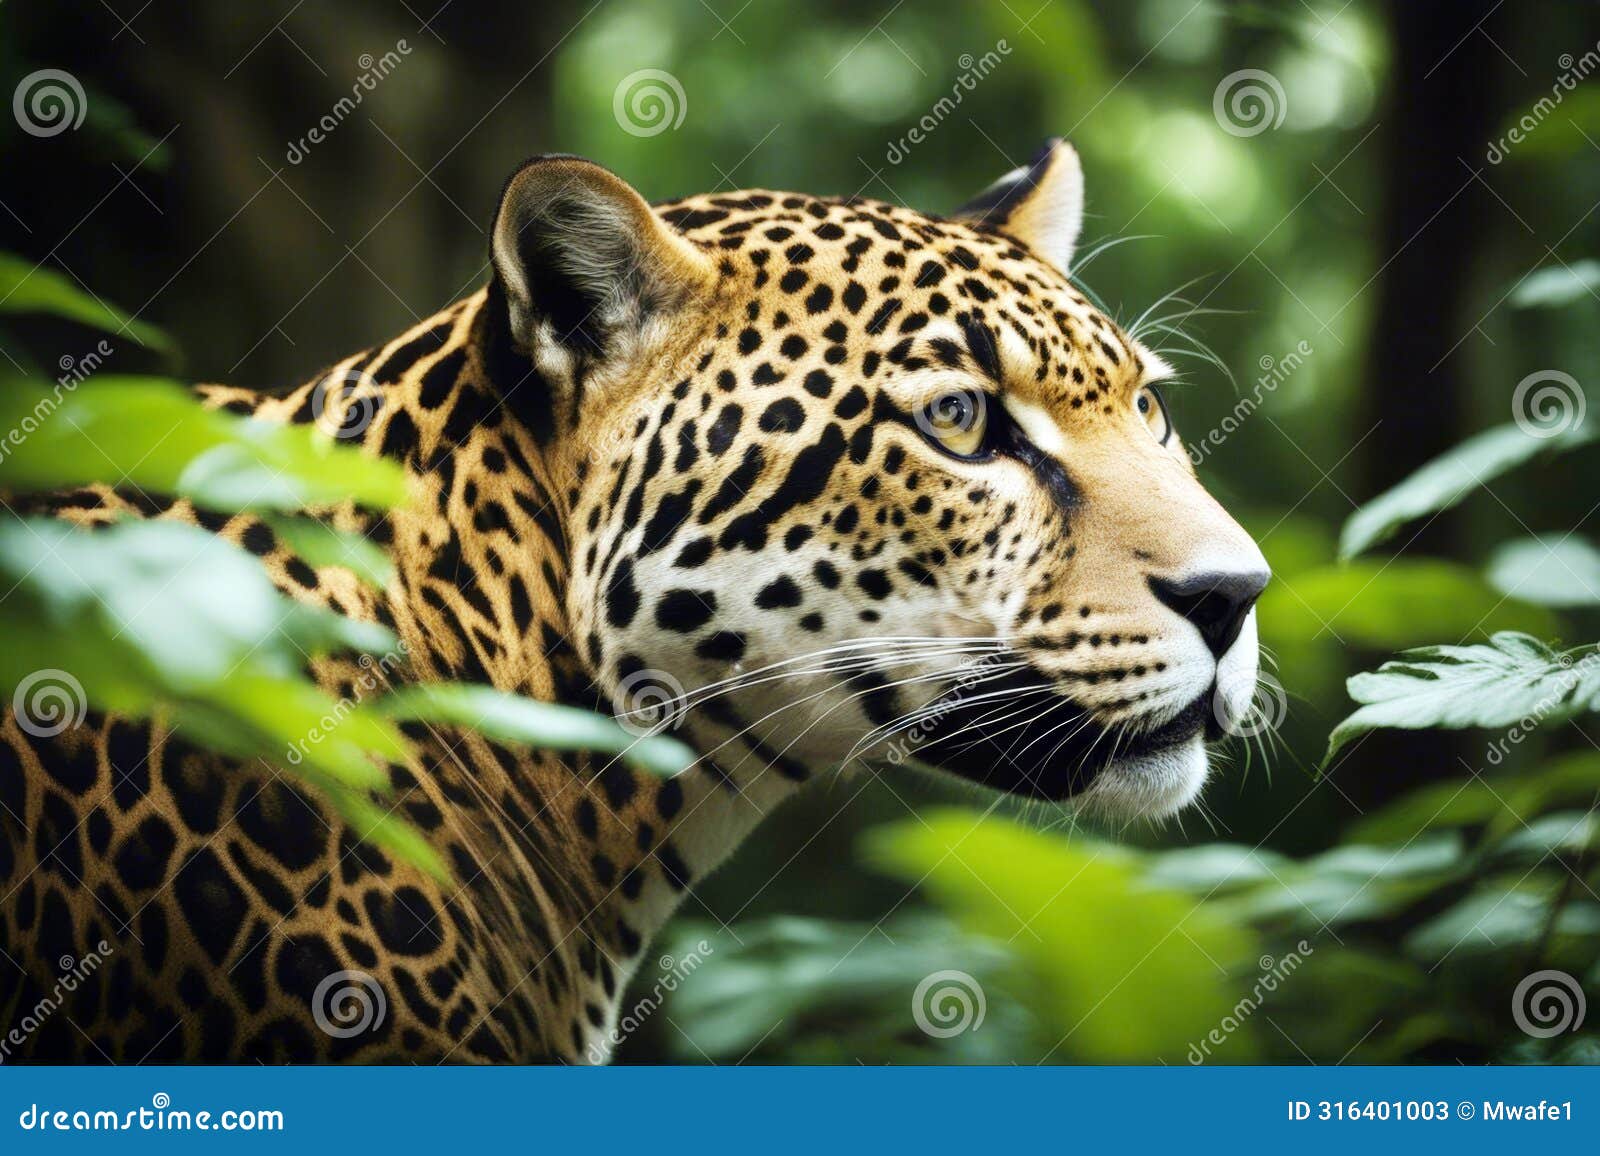 jaguar amazon forest rain panama danger face jungle wildlife peru white south background eye brazil patrol wild america felino fur